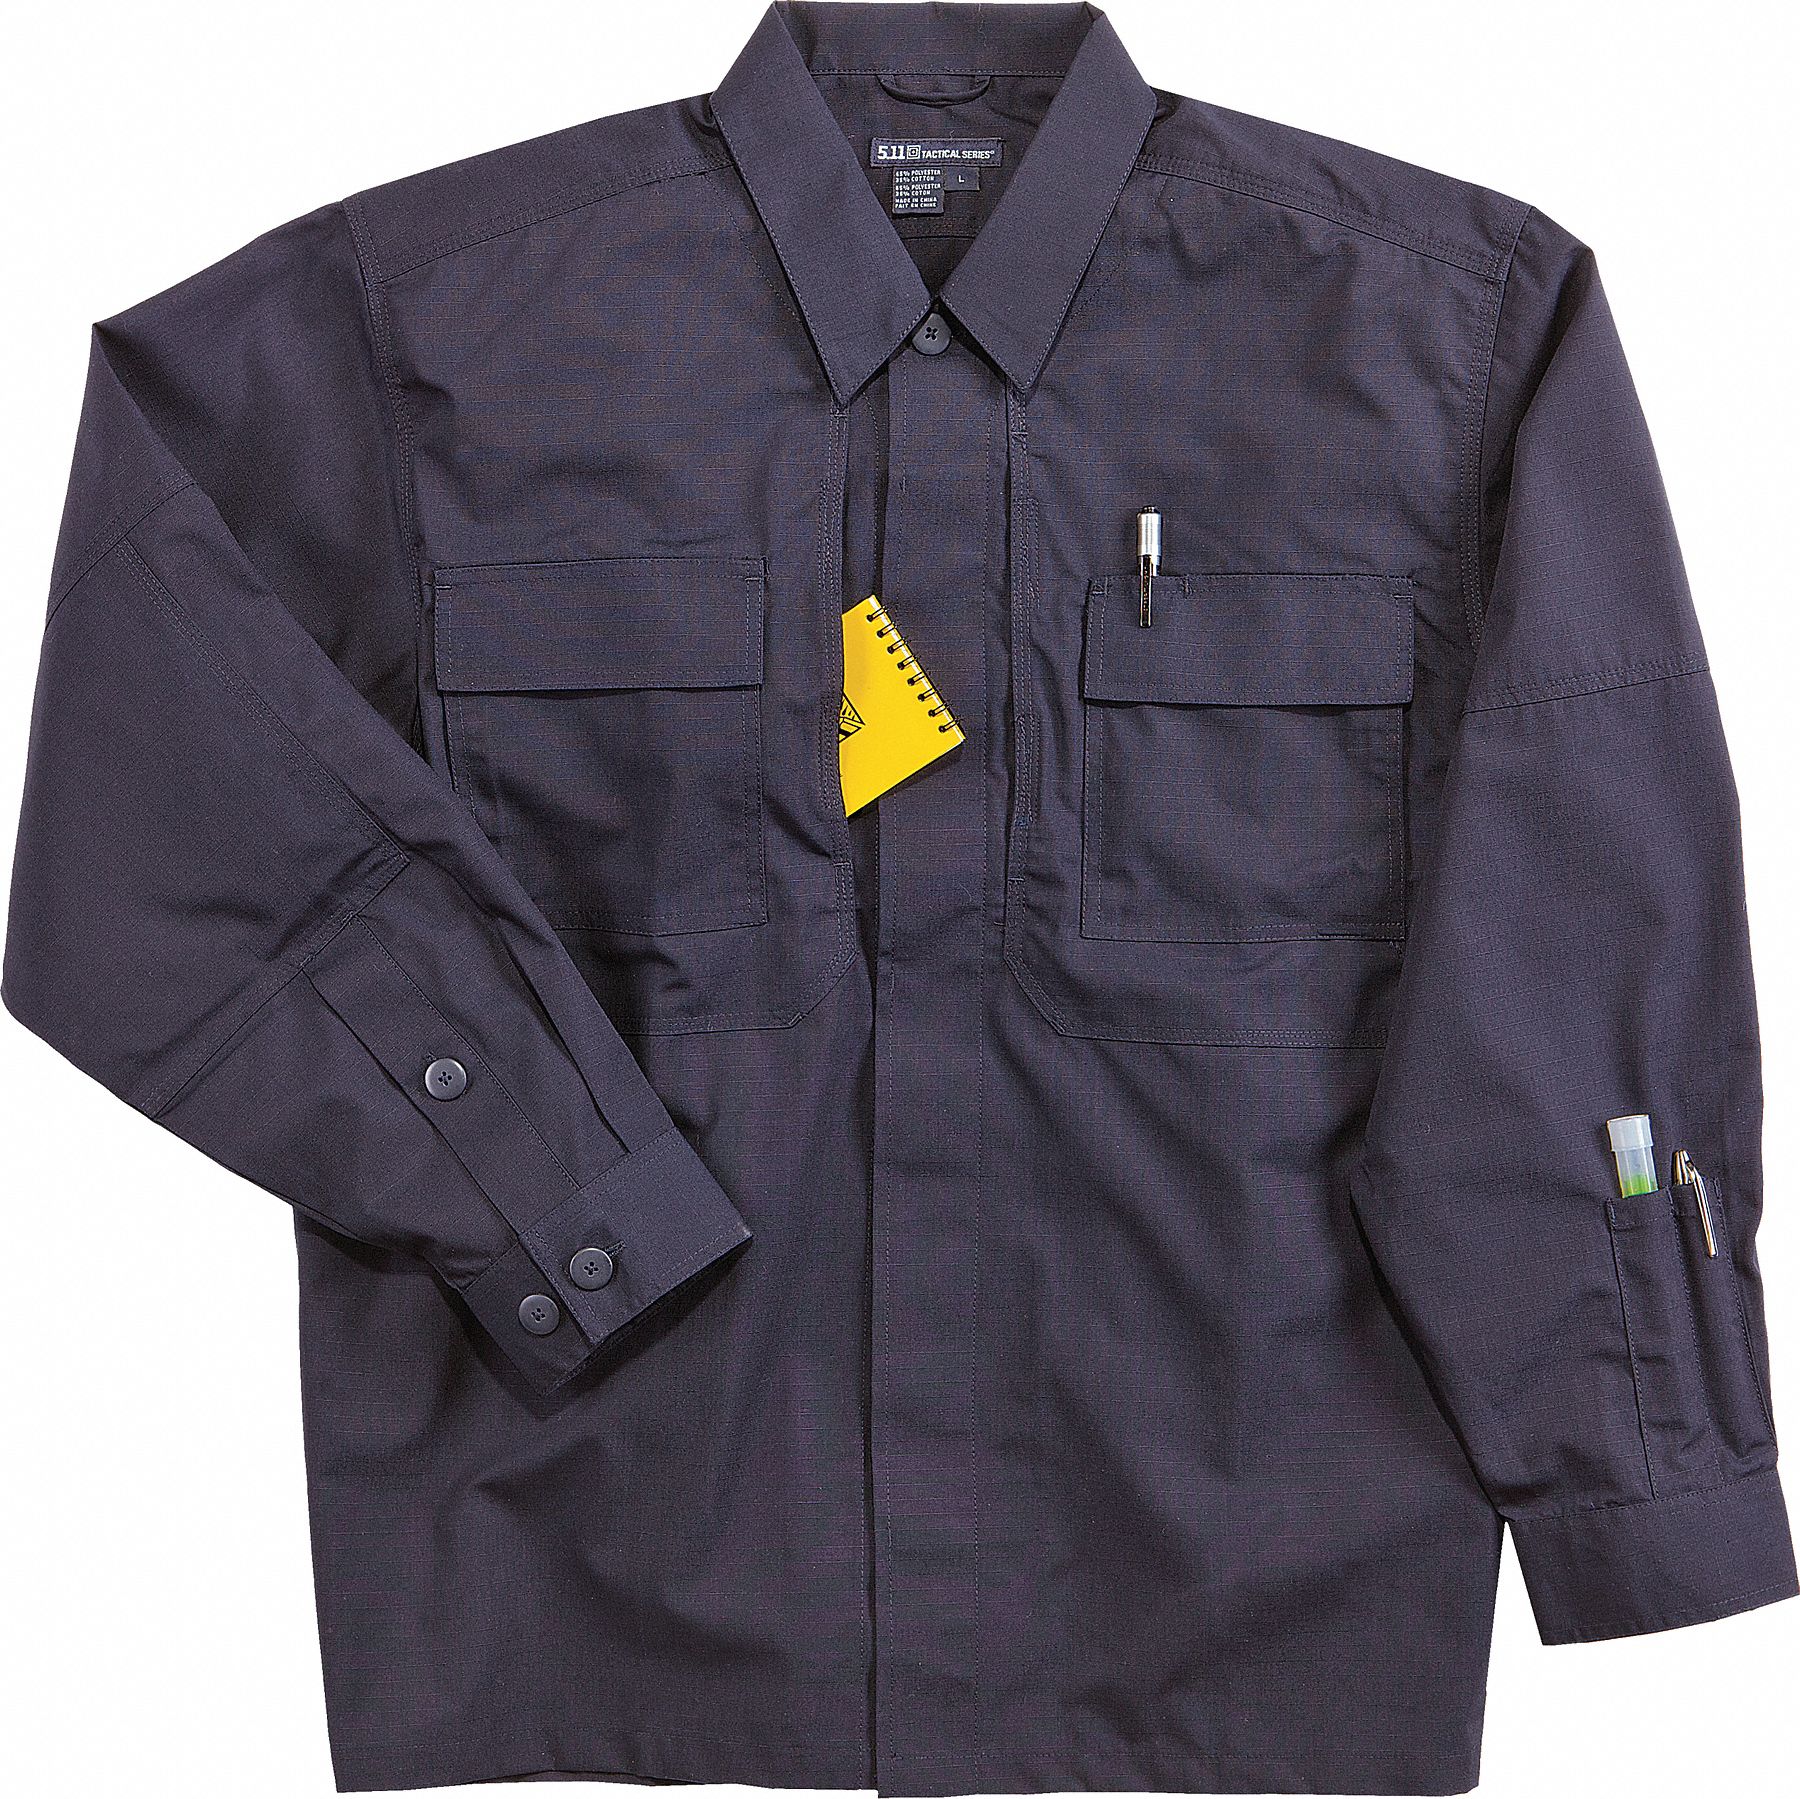 5.11 TACTICAL Taclite TDU Long Sleeve Shirt: Taclite TDU Long Sleeve Shirt,  3XL, Dark Navy